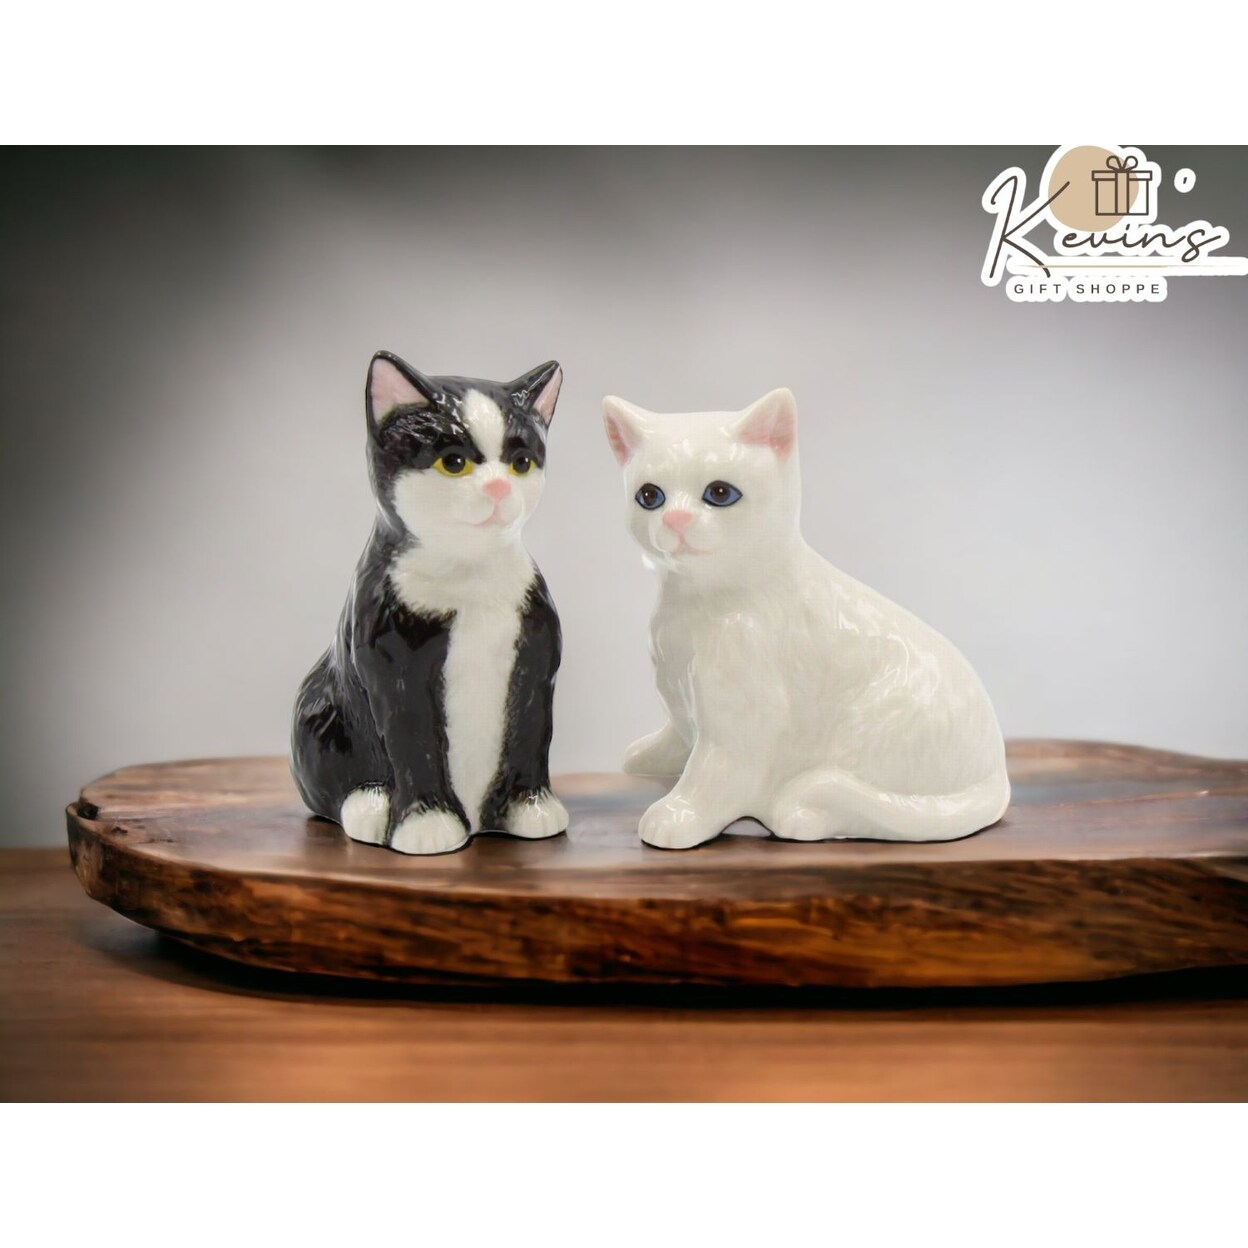 kevinsgiftshoppe Ceramic Cat Salt And Pepper Shaker Set Home Decor   Kitchen Decor